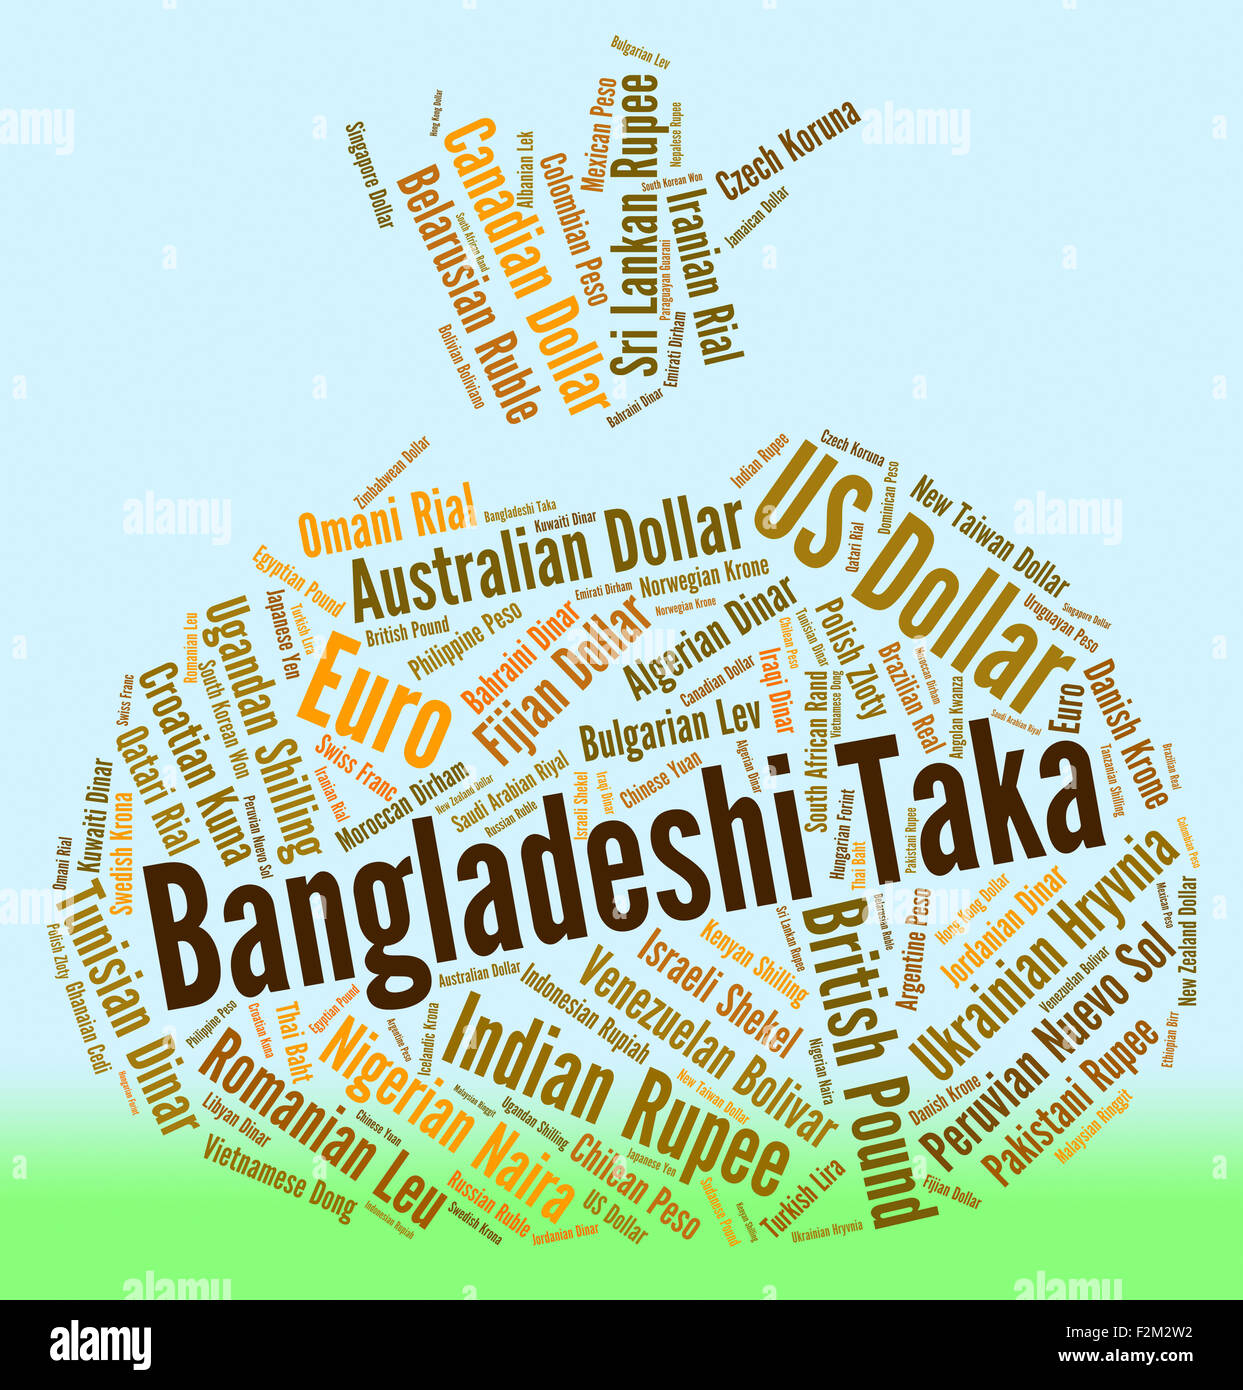 Bangladeshi Taka Meaning Exchange Rate And Bdt Stock Photo - Alamy